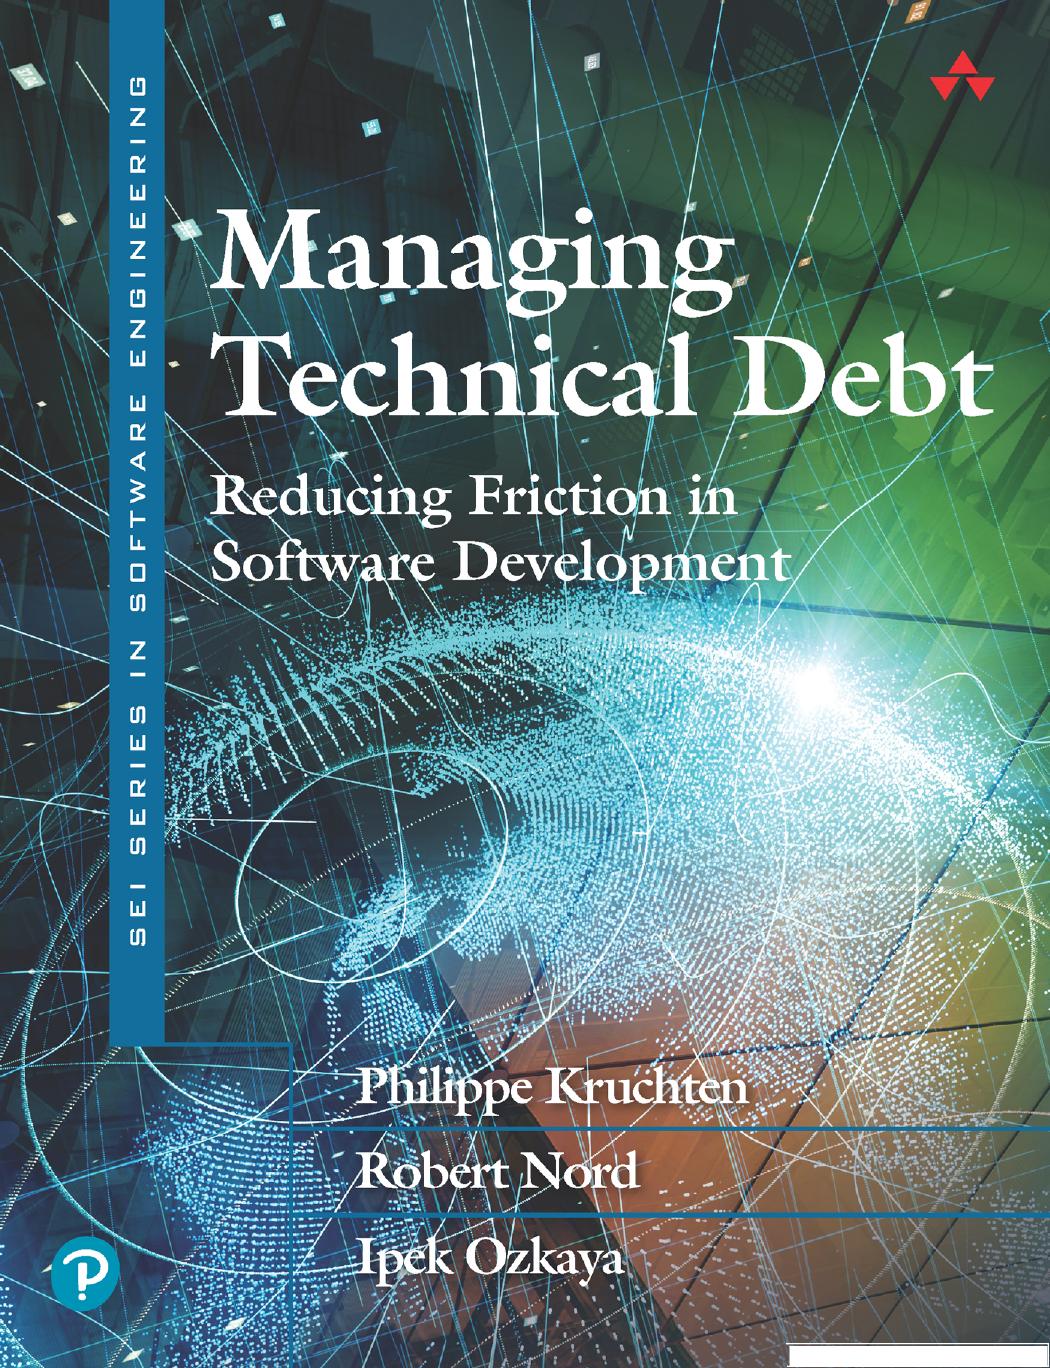 Managing Technical Debt by Philippe Kruchten & Robert Nord & Ipek Ozkaya